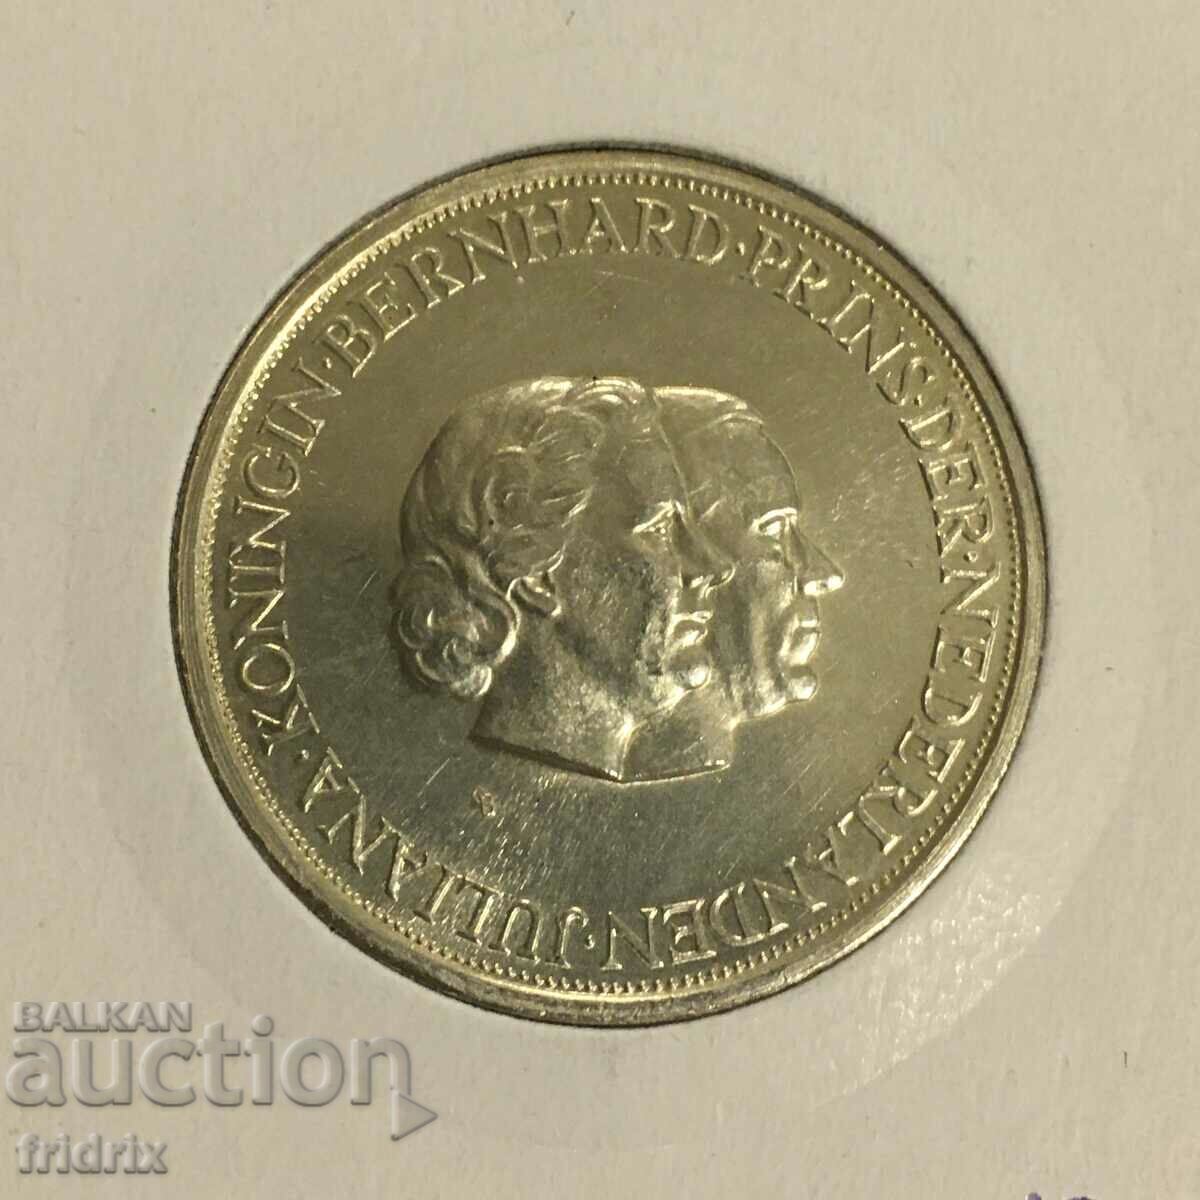 Medalia de argint Olanda Proof 1962